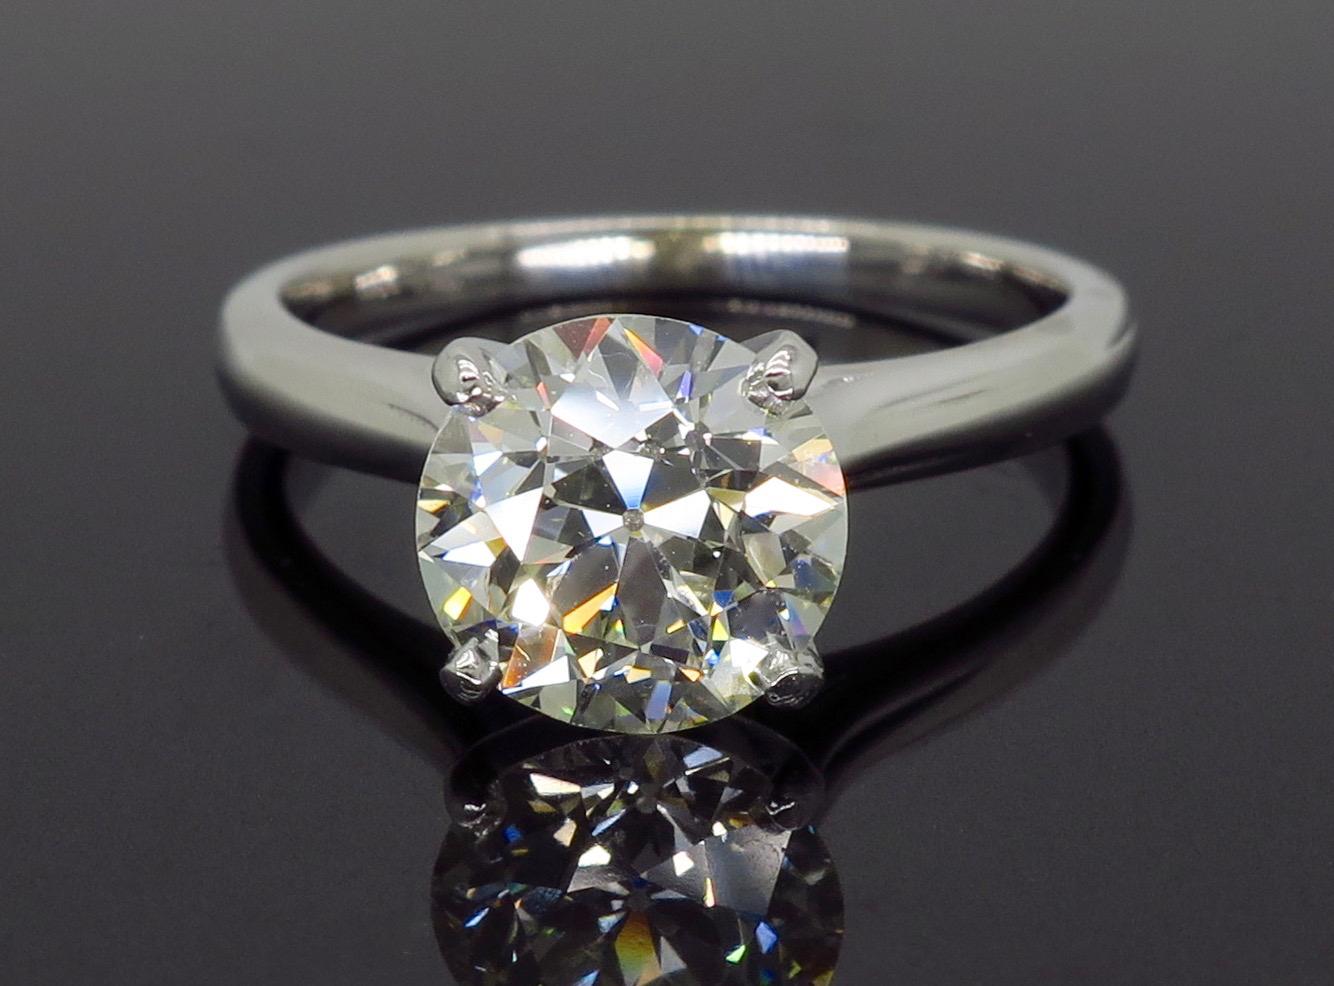 2.22 carat diamond ring